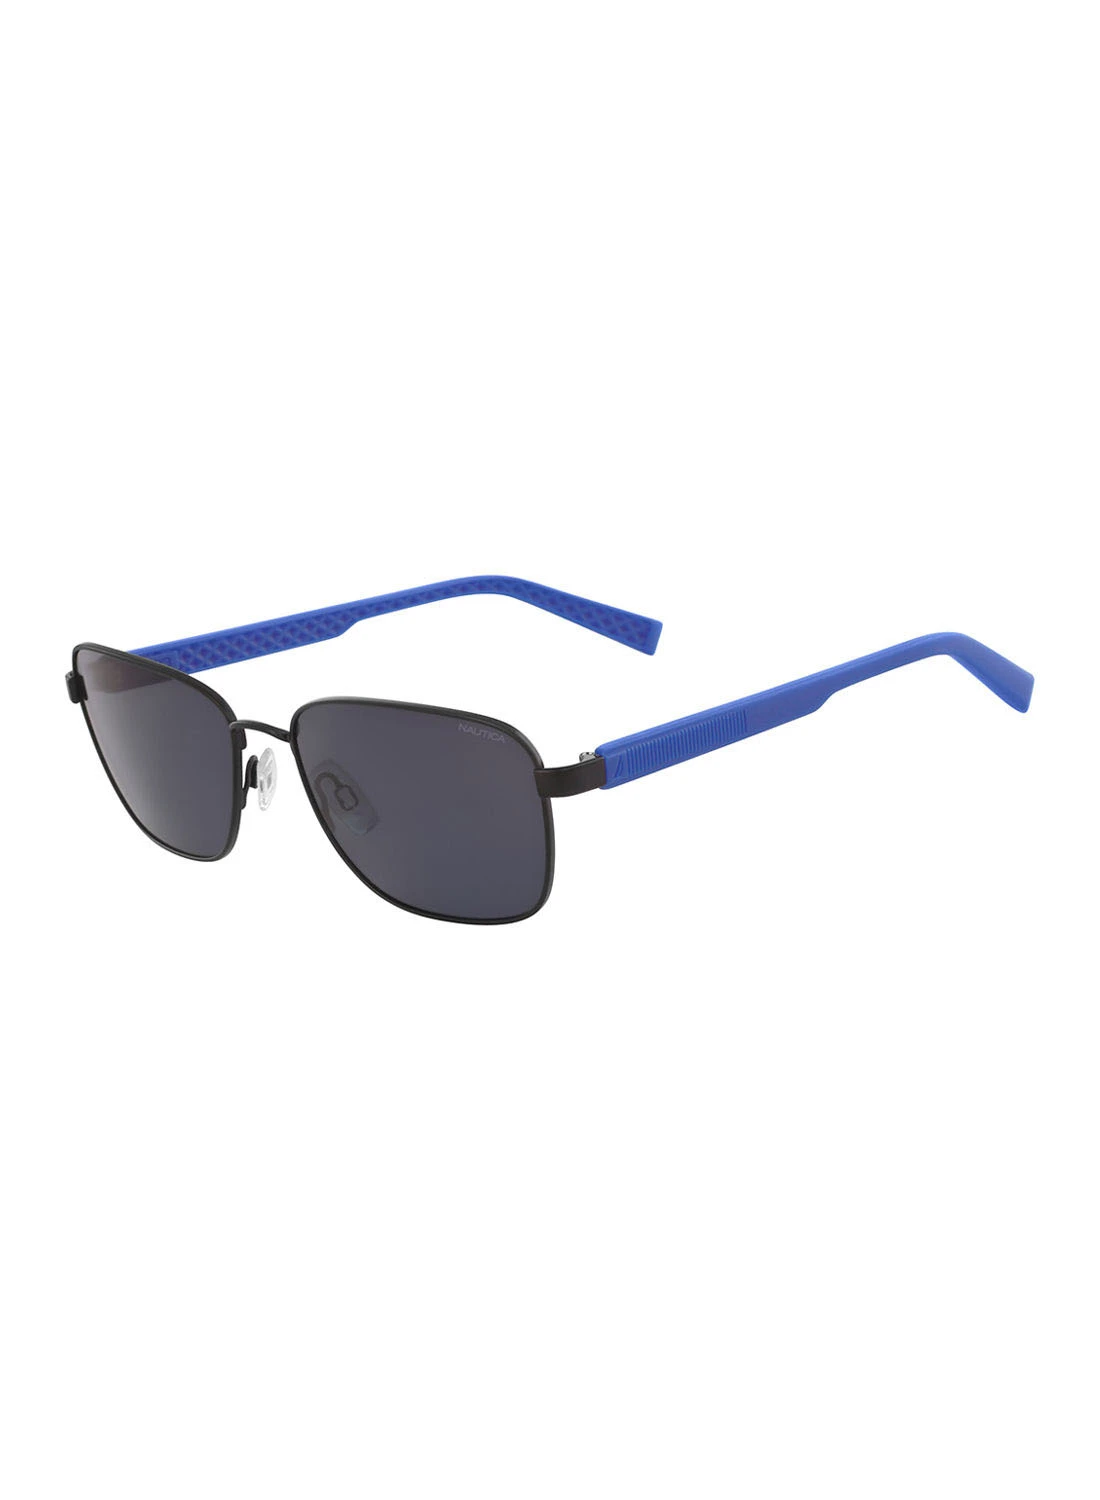 NAUTICA Men's UV Protection Rectangular Sunglasses - Lens Size: 58 mm